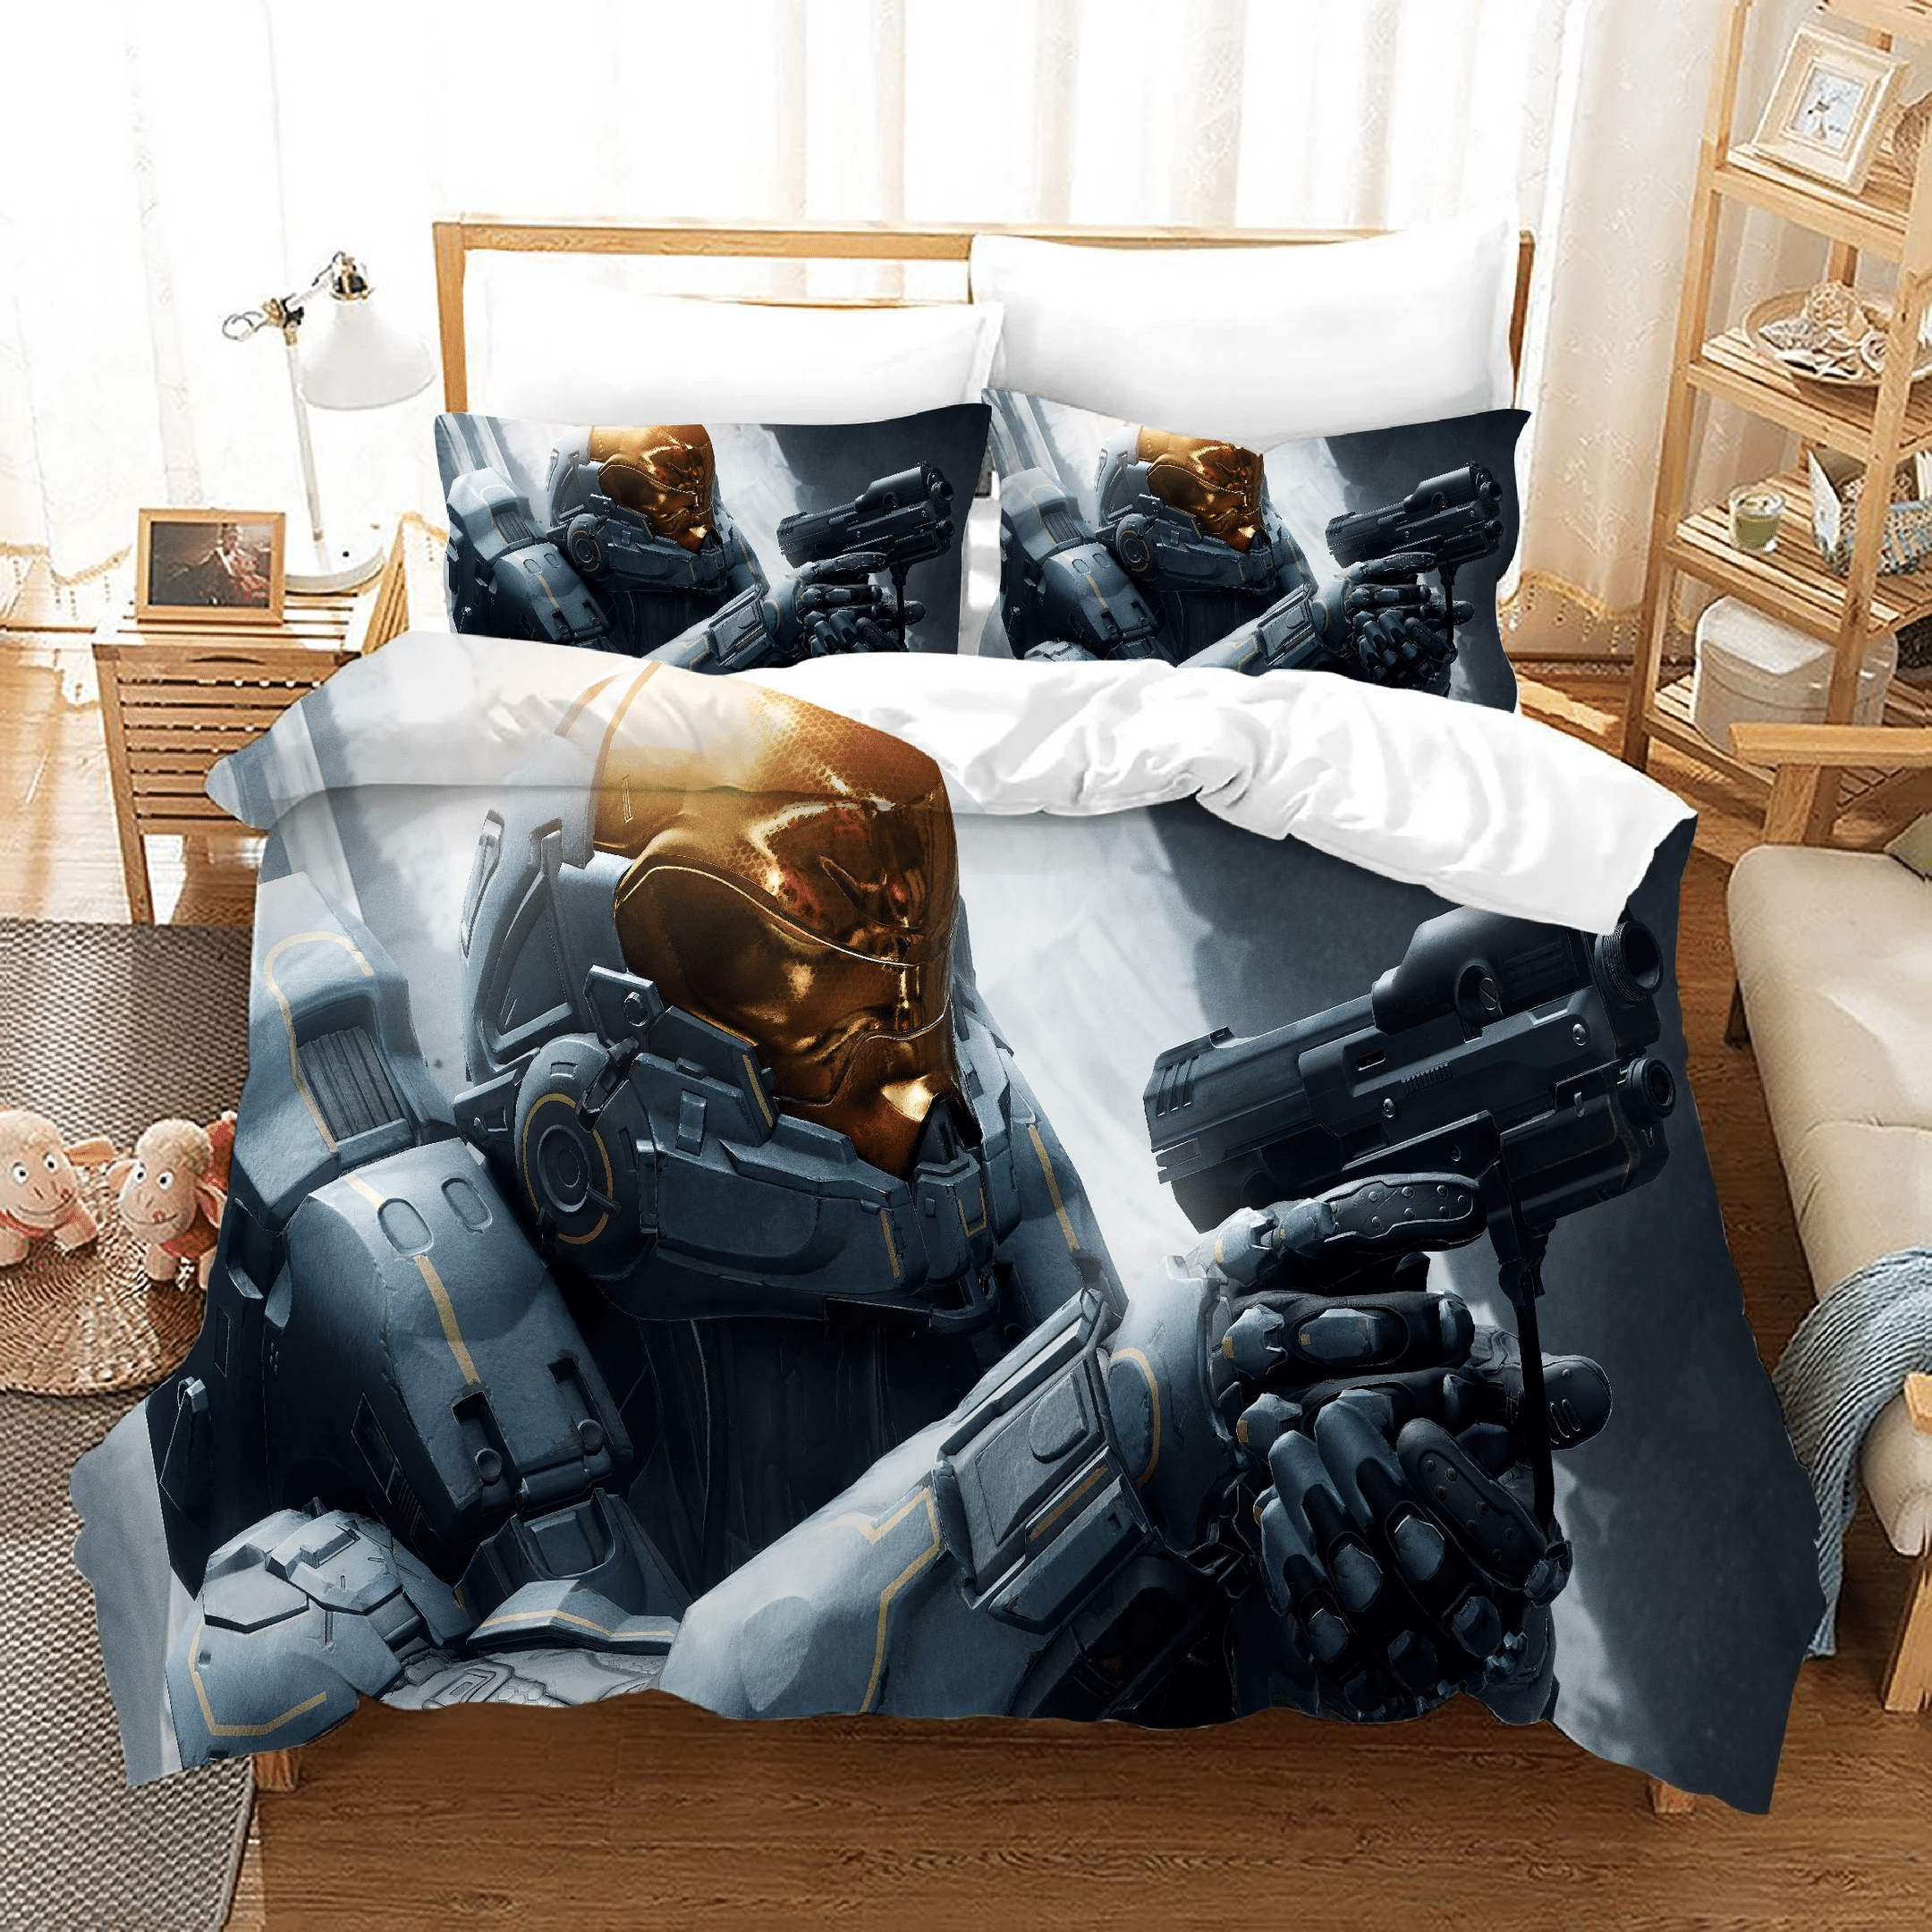 Halo 5 Guardians 10 Duvet Cover Quilt Cover Pillowcase Bedding